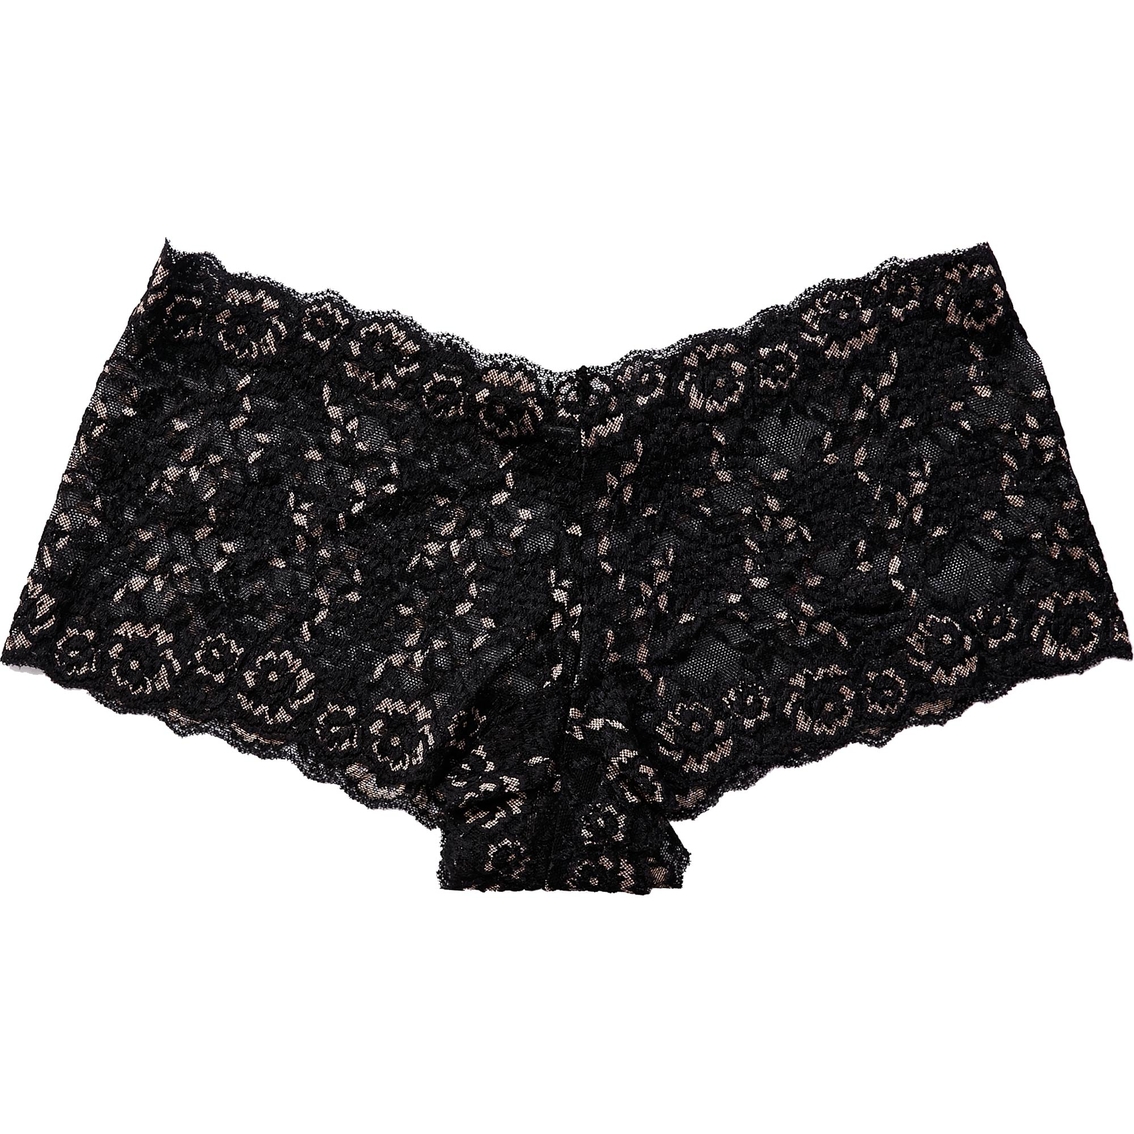 Burlen Christies Plus Size Lace Cheeky Panty | Lingerie | Clothing ...